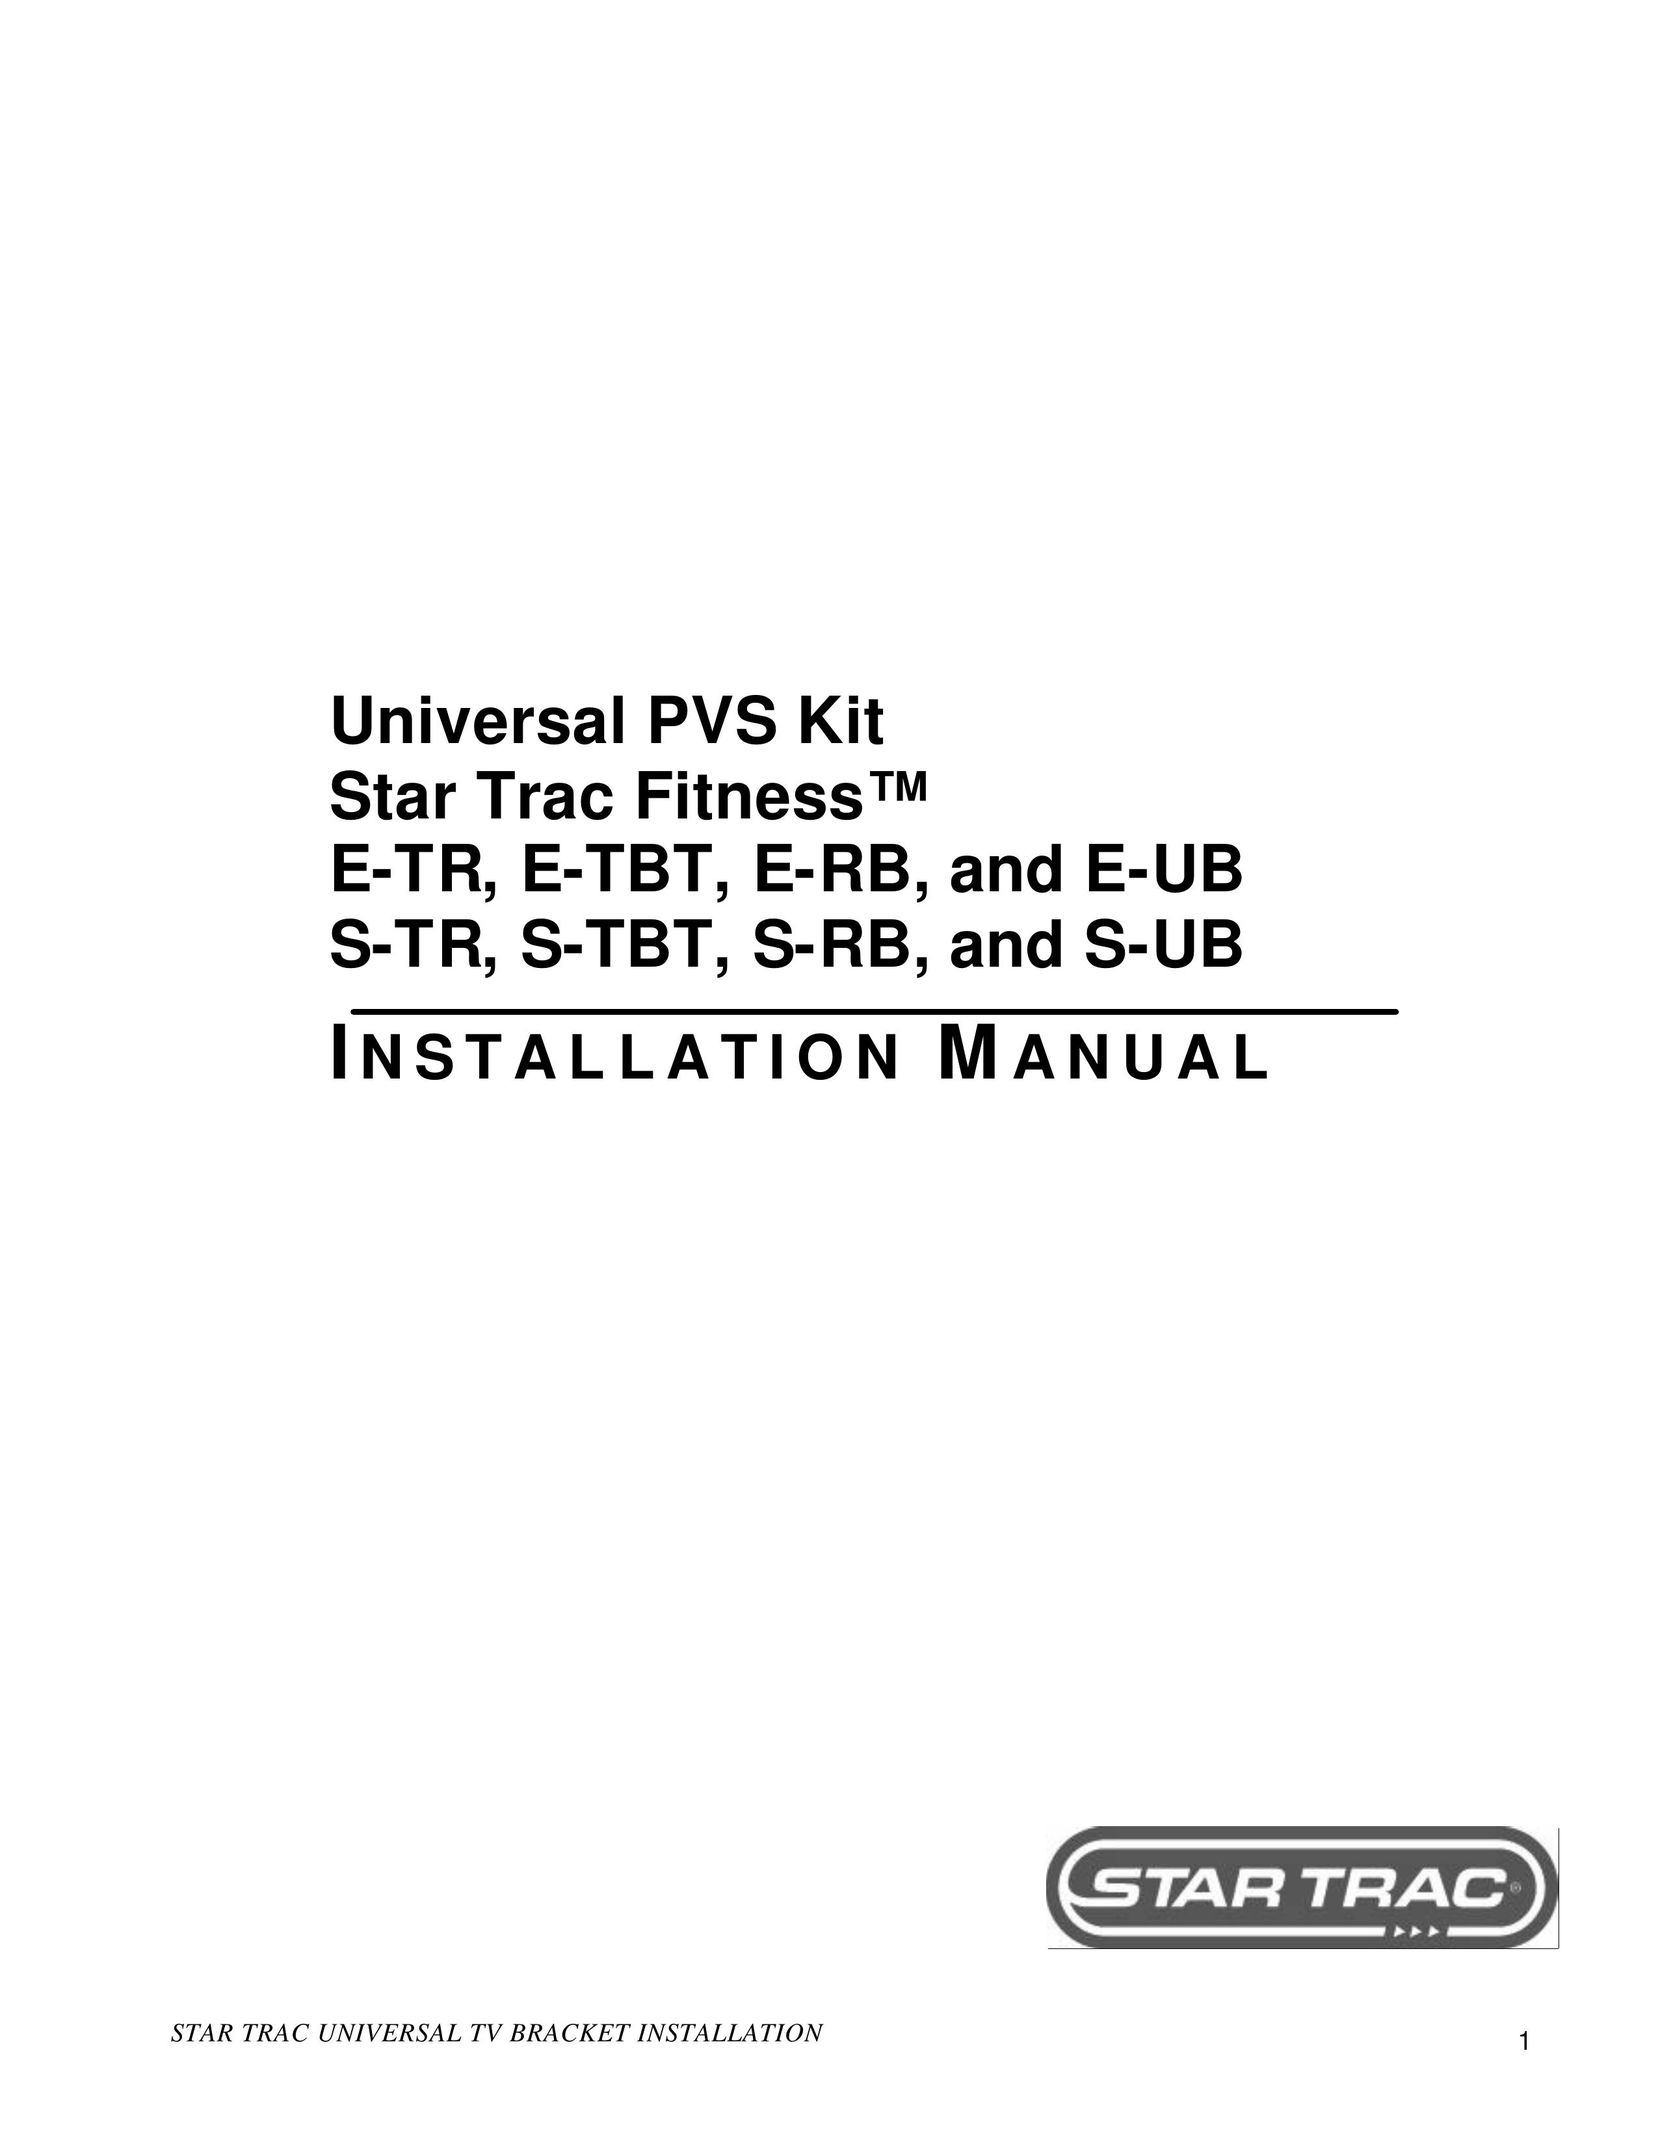 Star Trac E-UB Bicycle User Manual